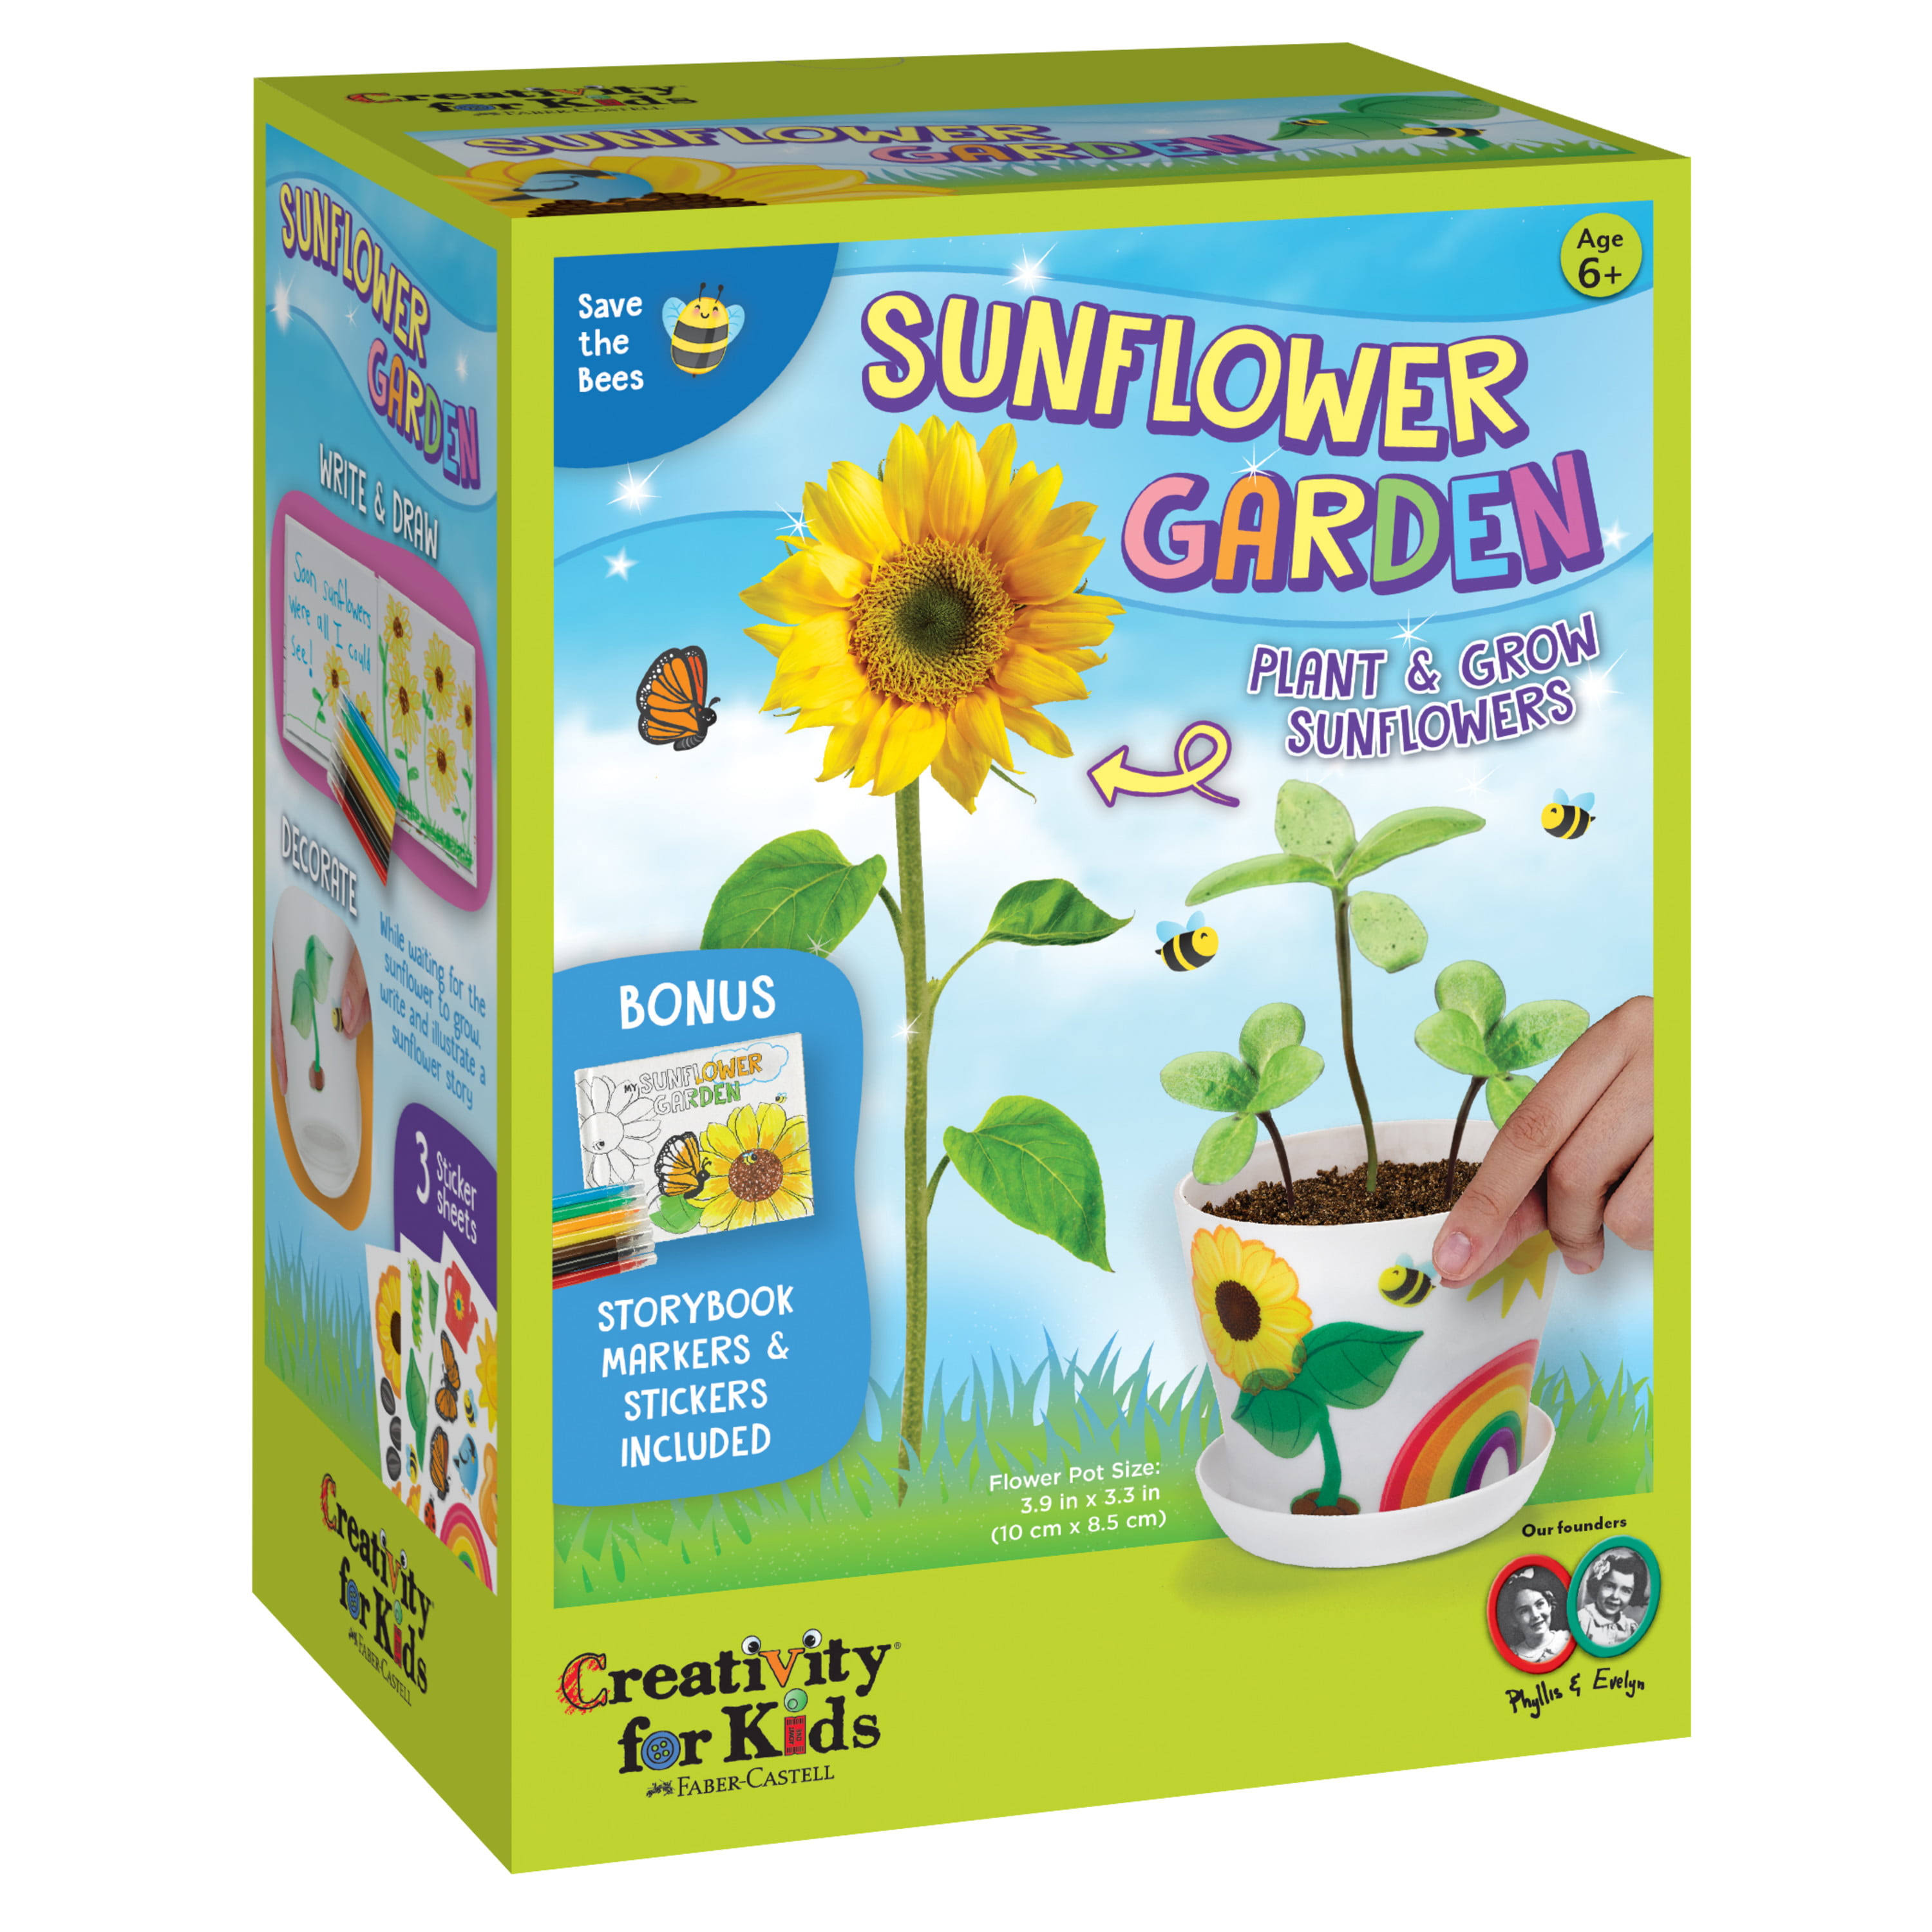 Creativity for Kids Sunflower Garden - Sunflower Growing Kit - Garden